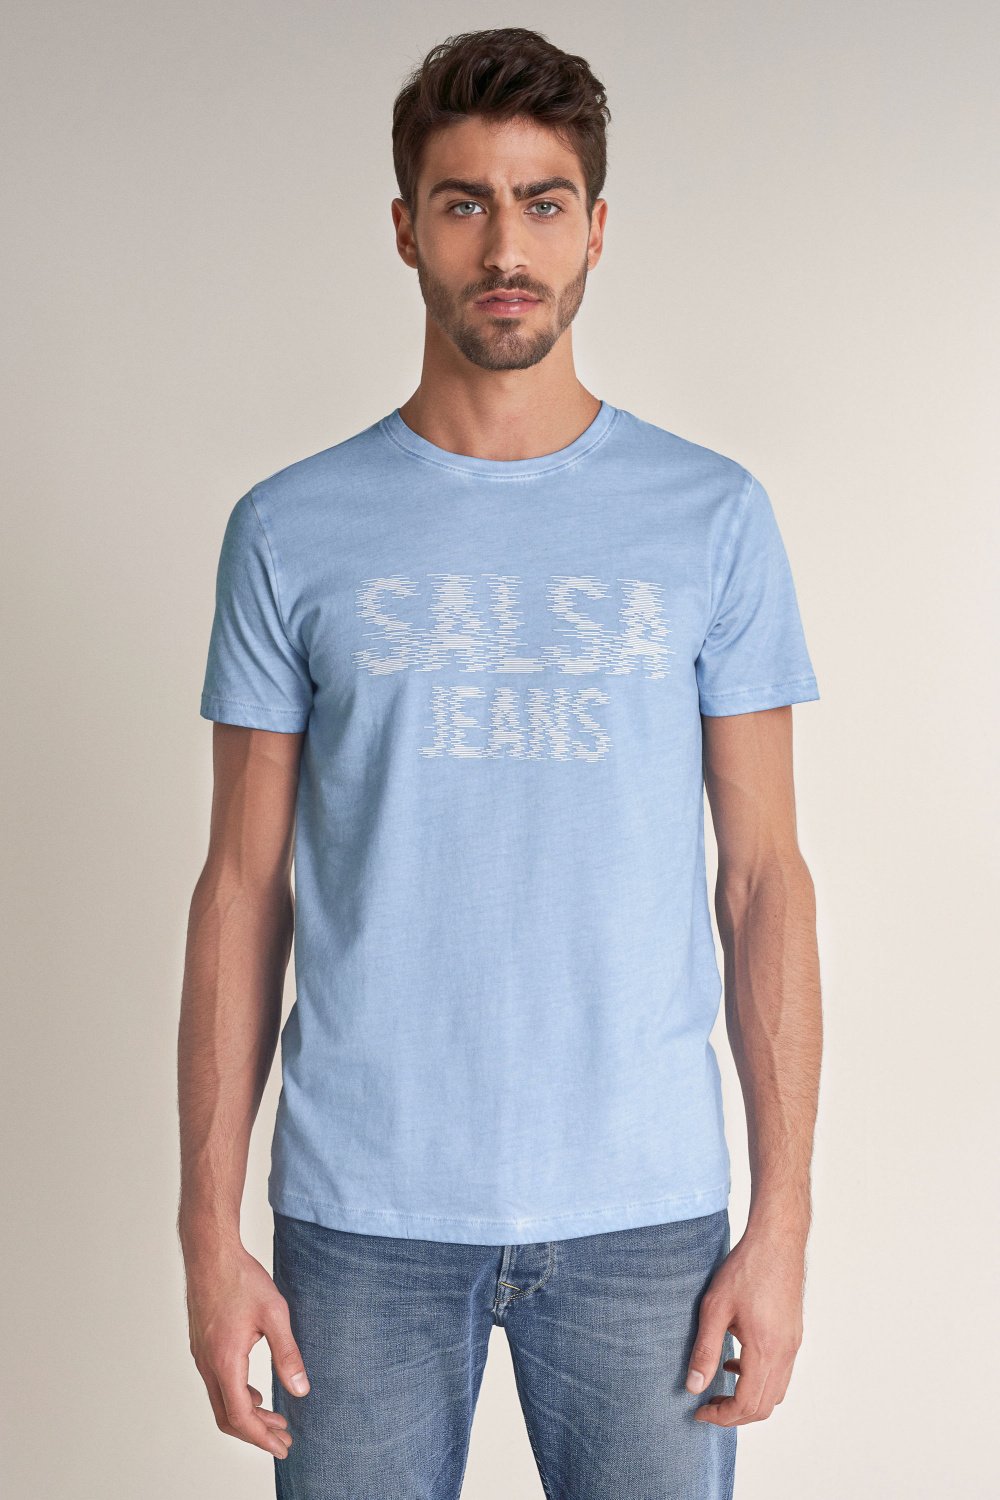 T-shirt with logo - Salsa